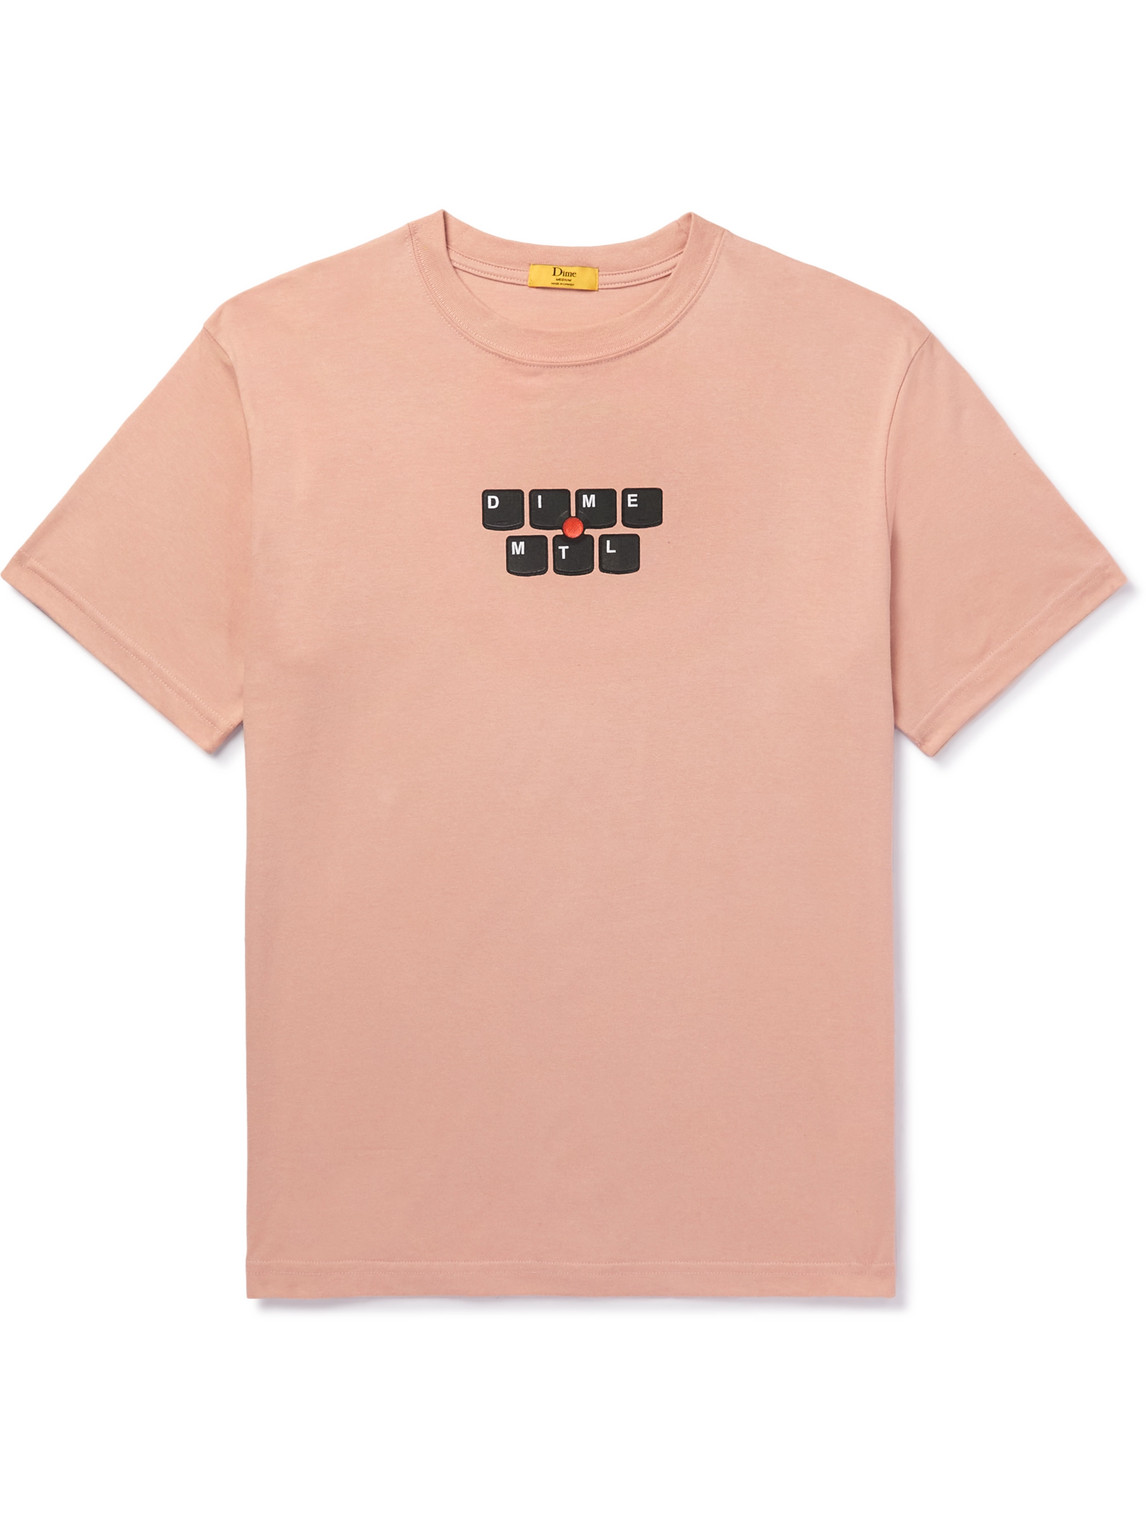 DIME Thinkpad Logo-Print Cotton-Jersey T-Shirt